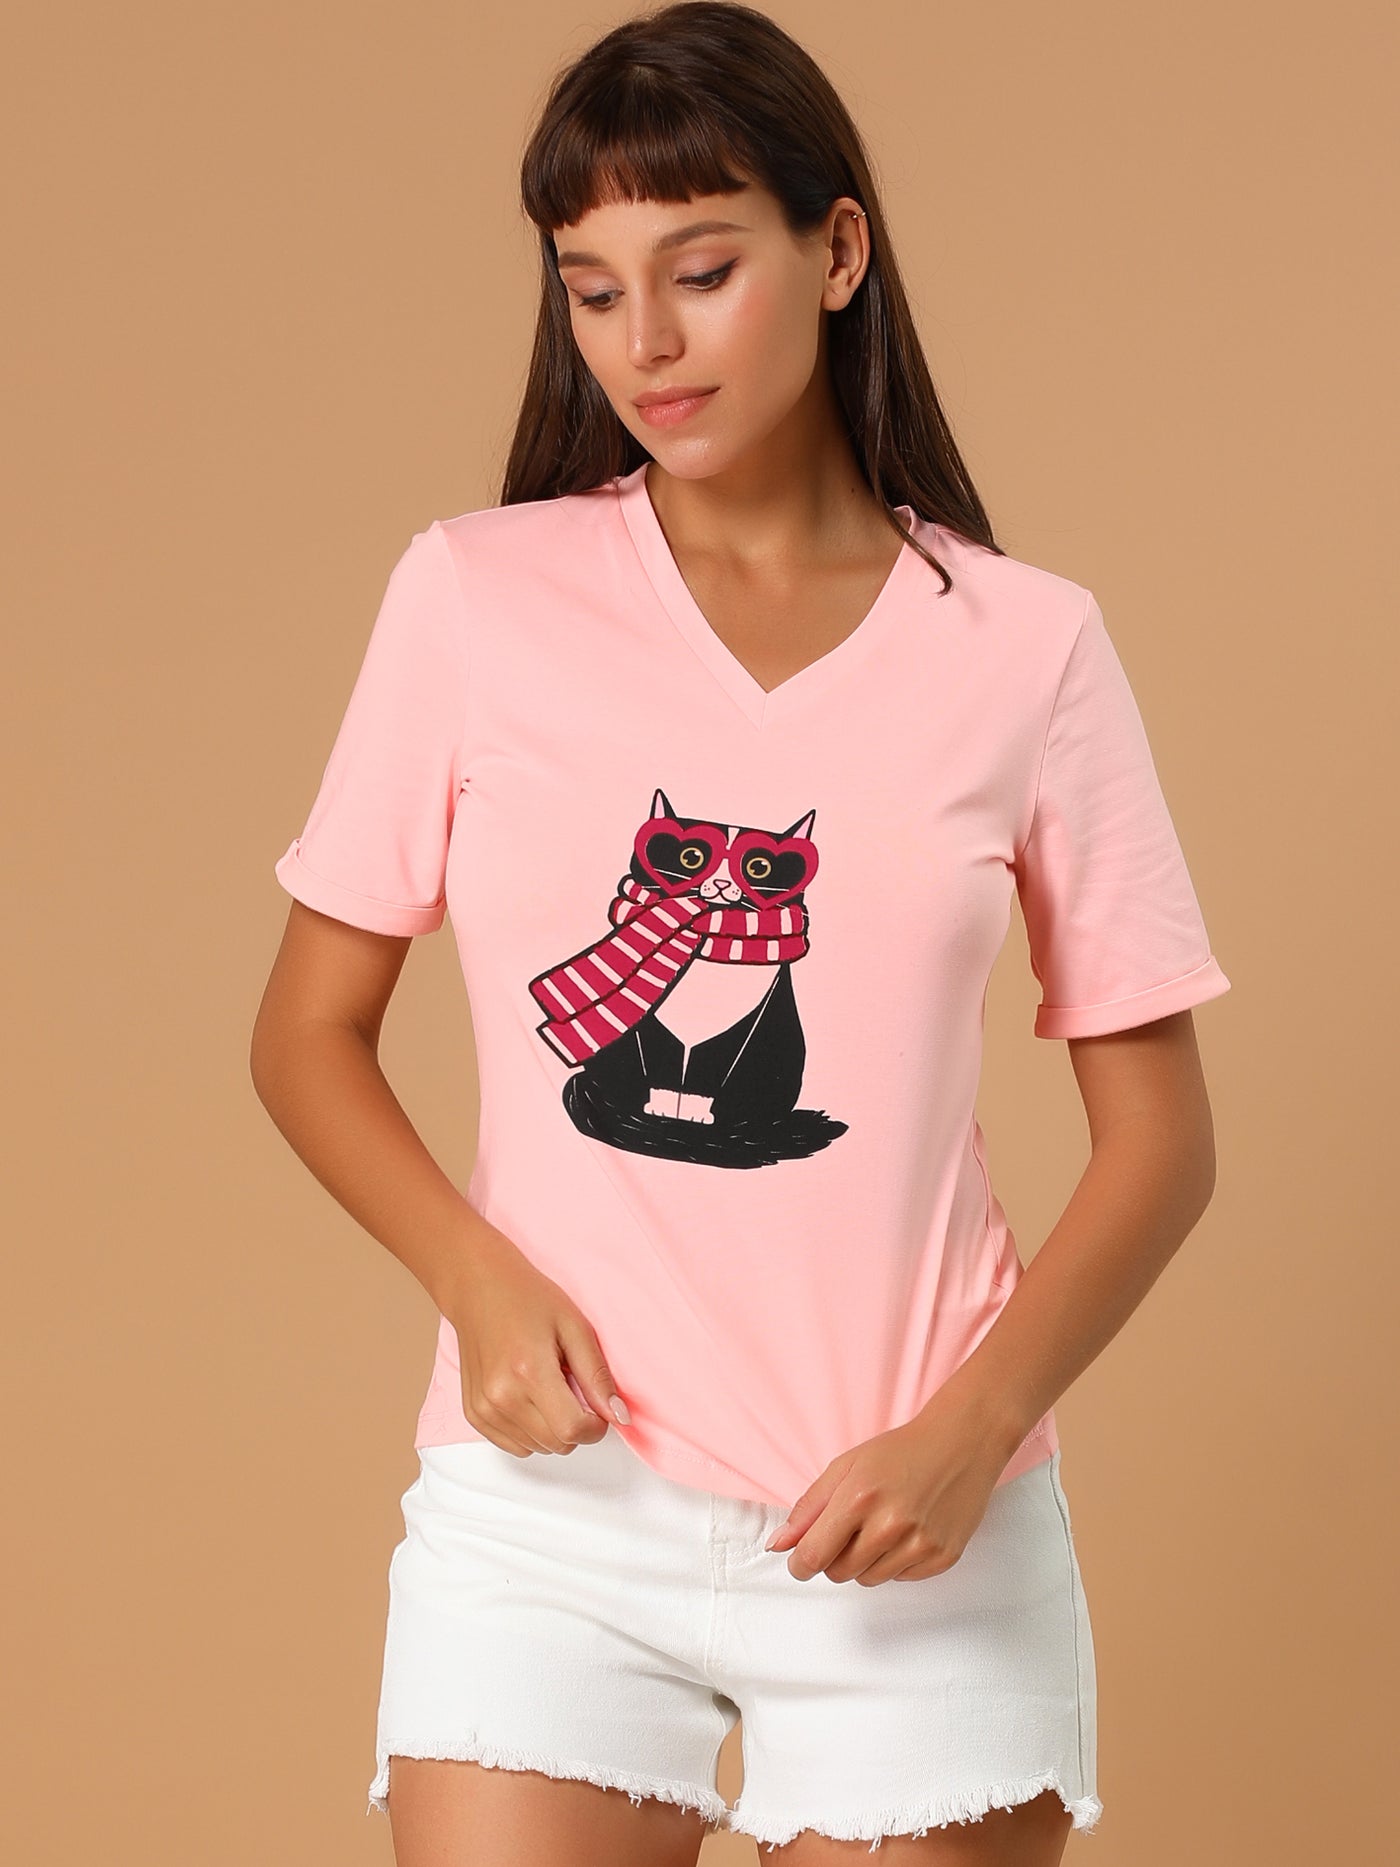 Allegra K V Neck Cartoon Cat Print Cotton Short Sleeve T Shirts